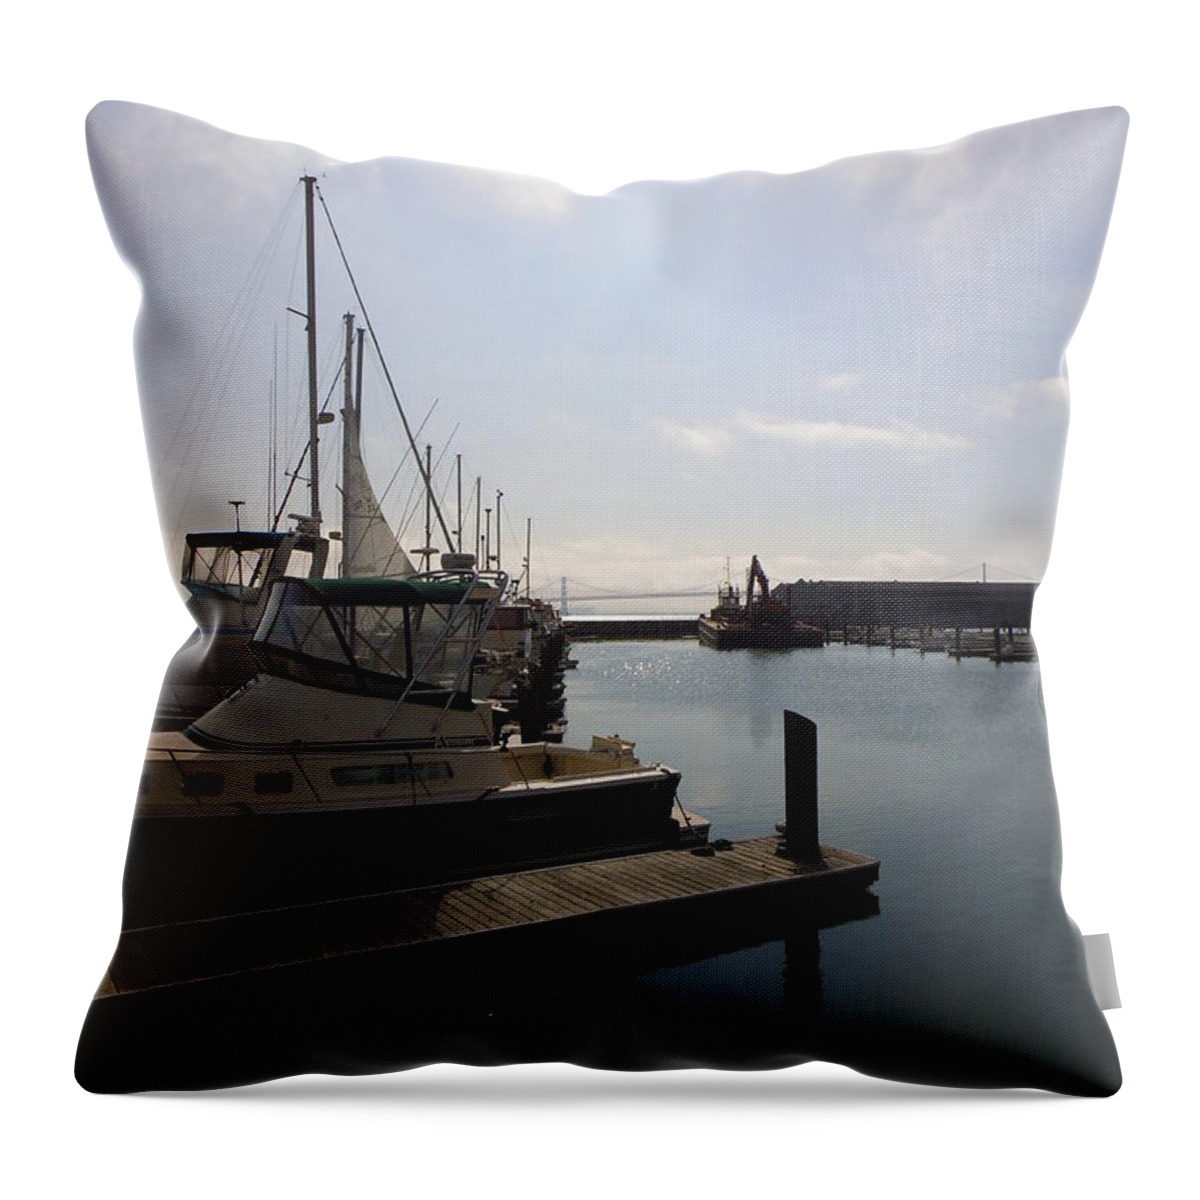  Throw Pillow featuring the photograph San Francisco Docks by Heather E Harman